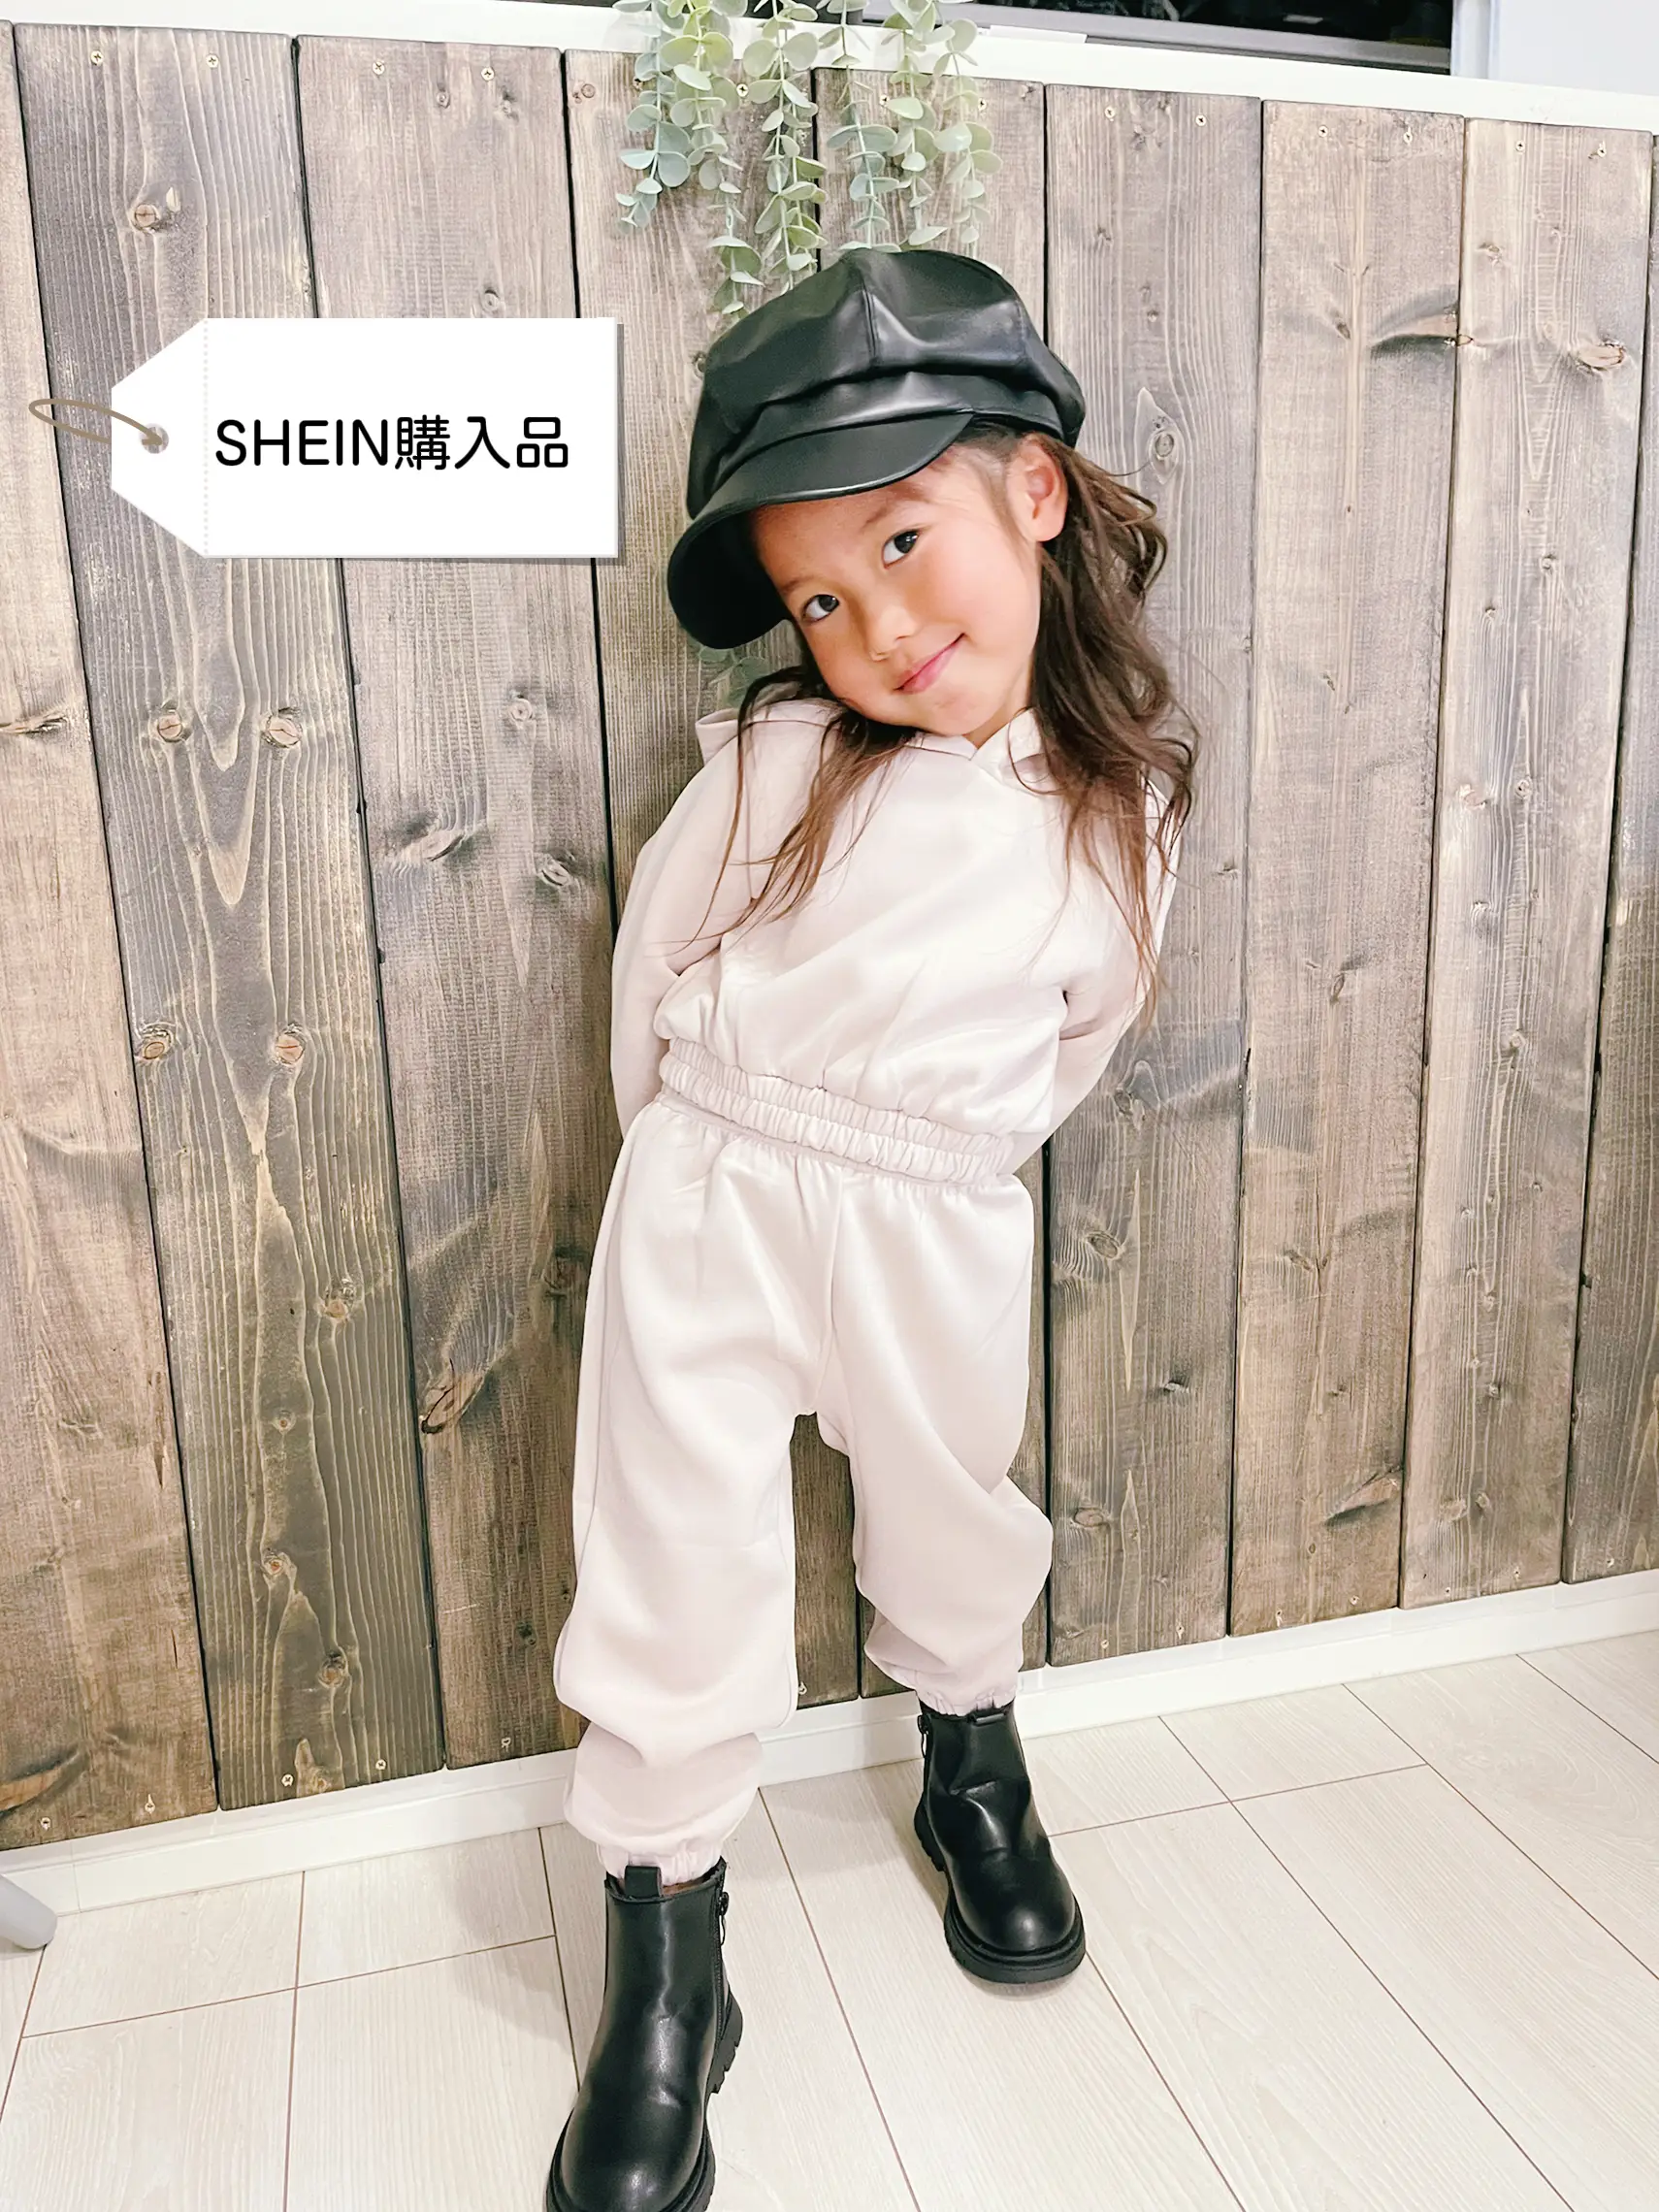 SHEIN シーイン セットアップ クマ 子供服80センチ - ロンパース